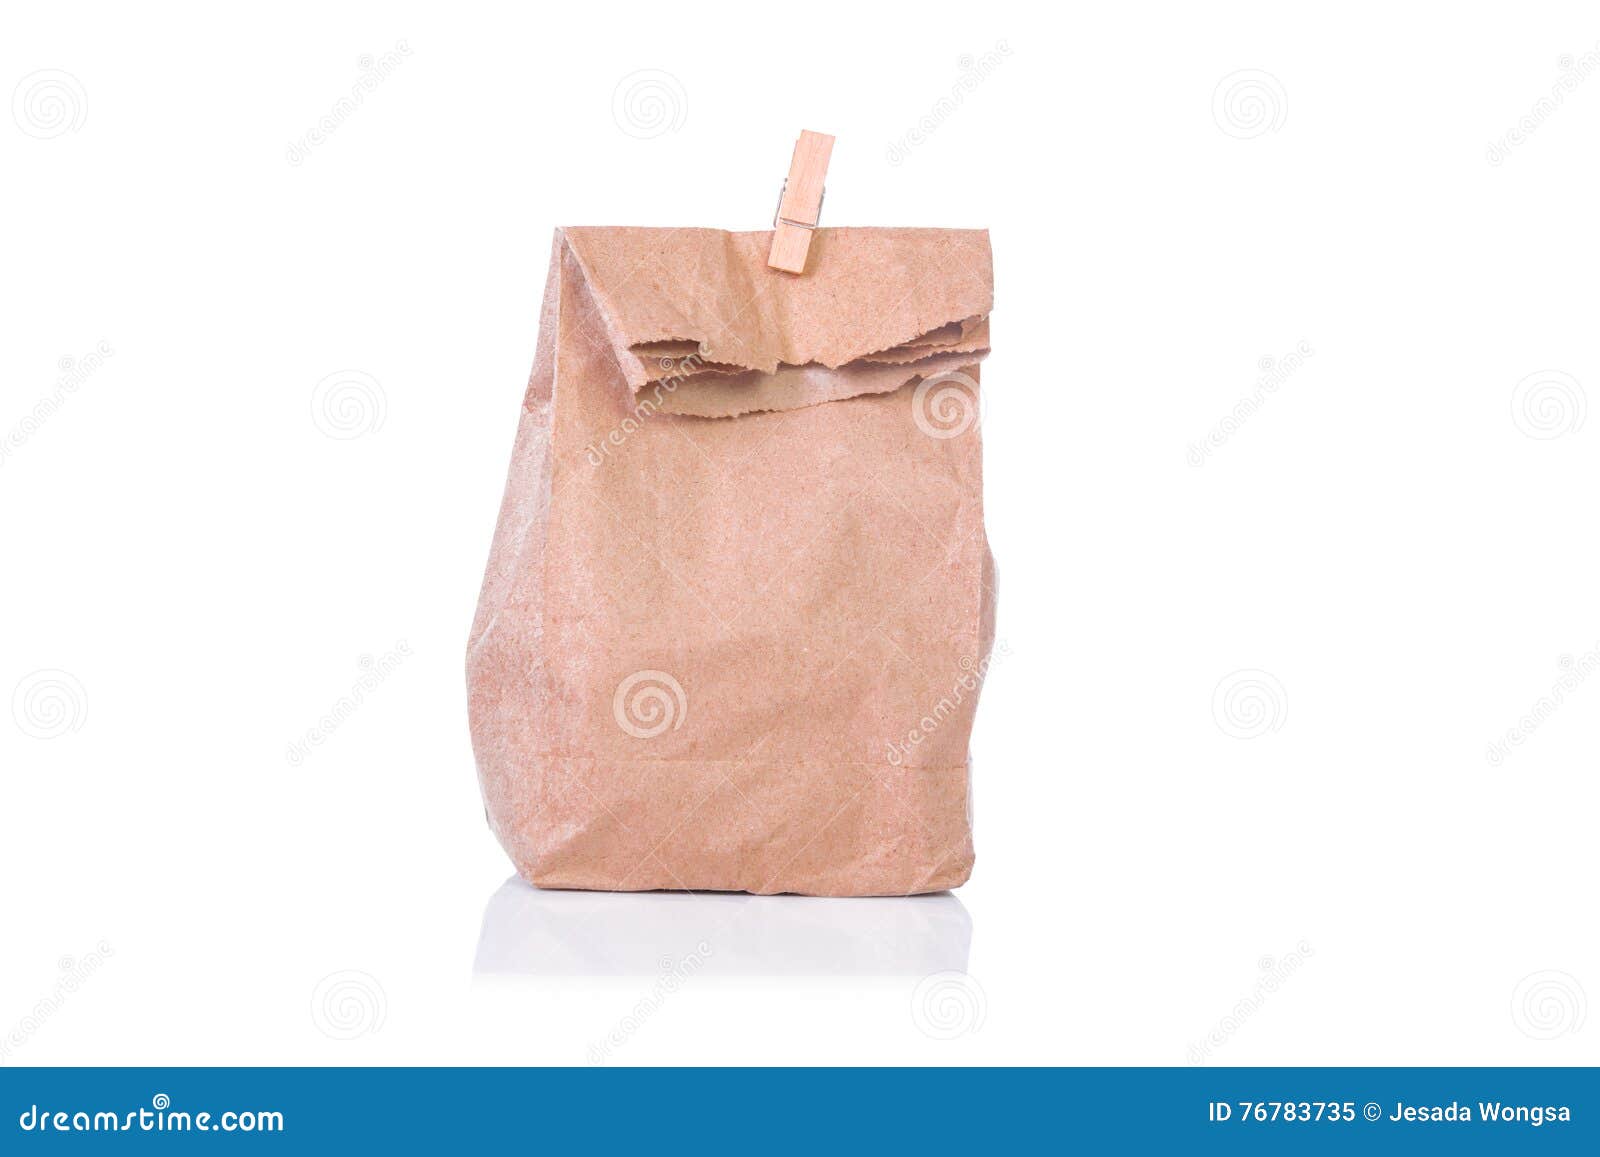 Pin on shopping bag paper